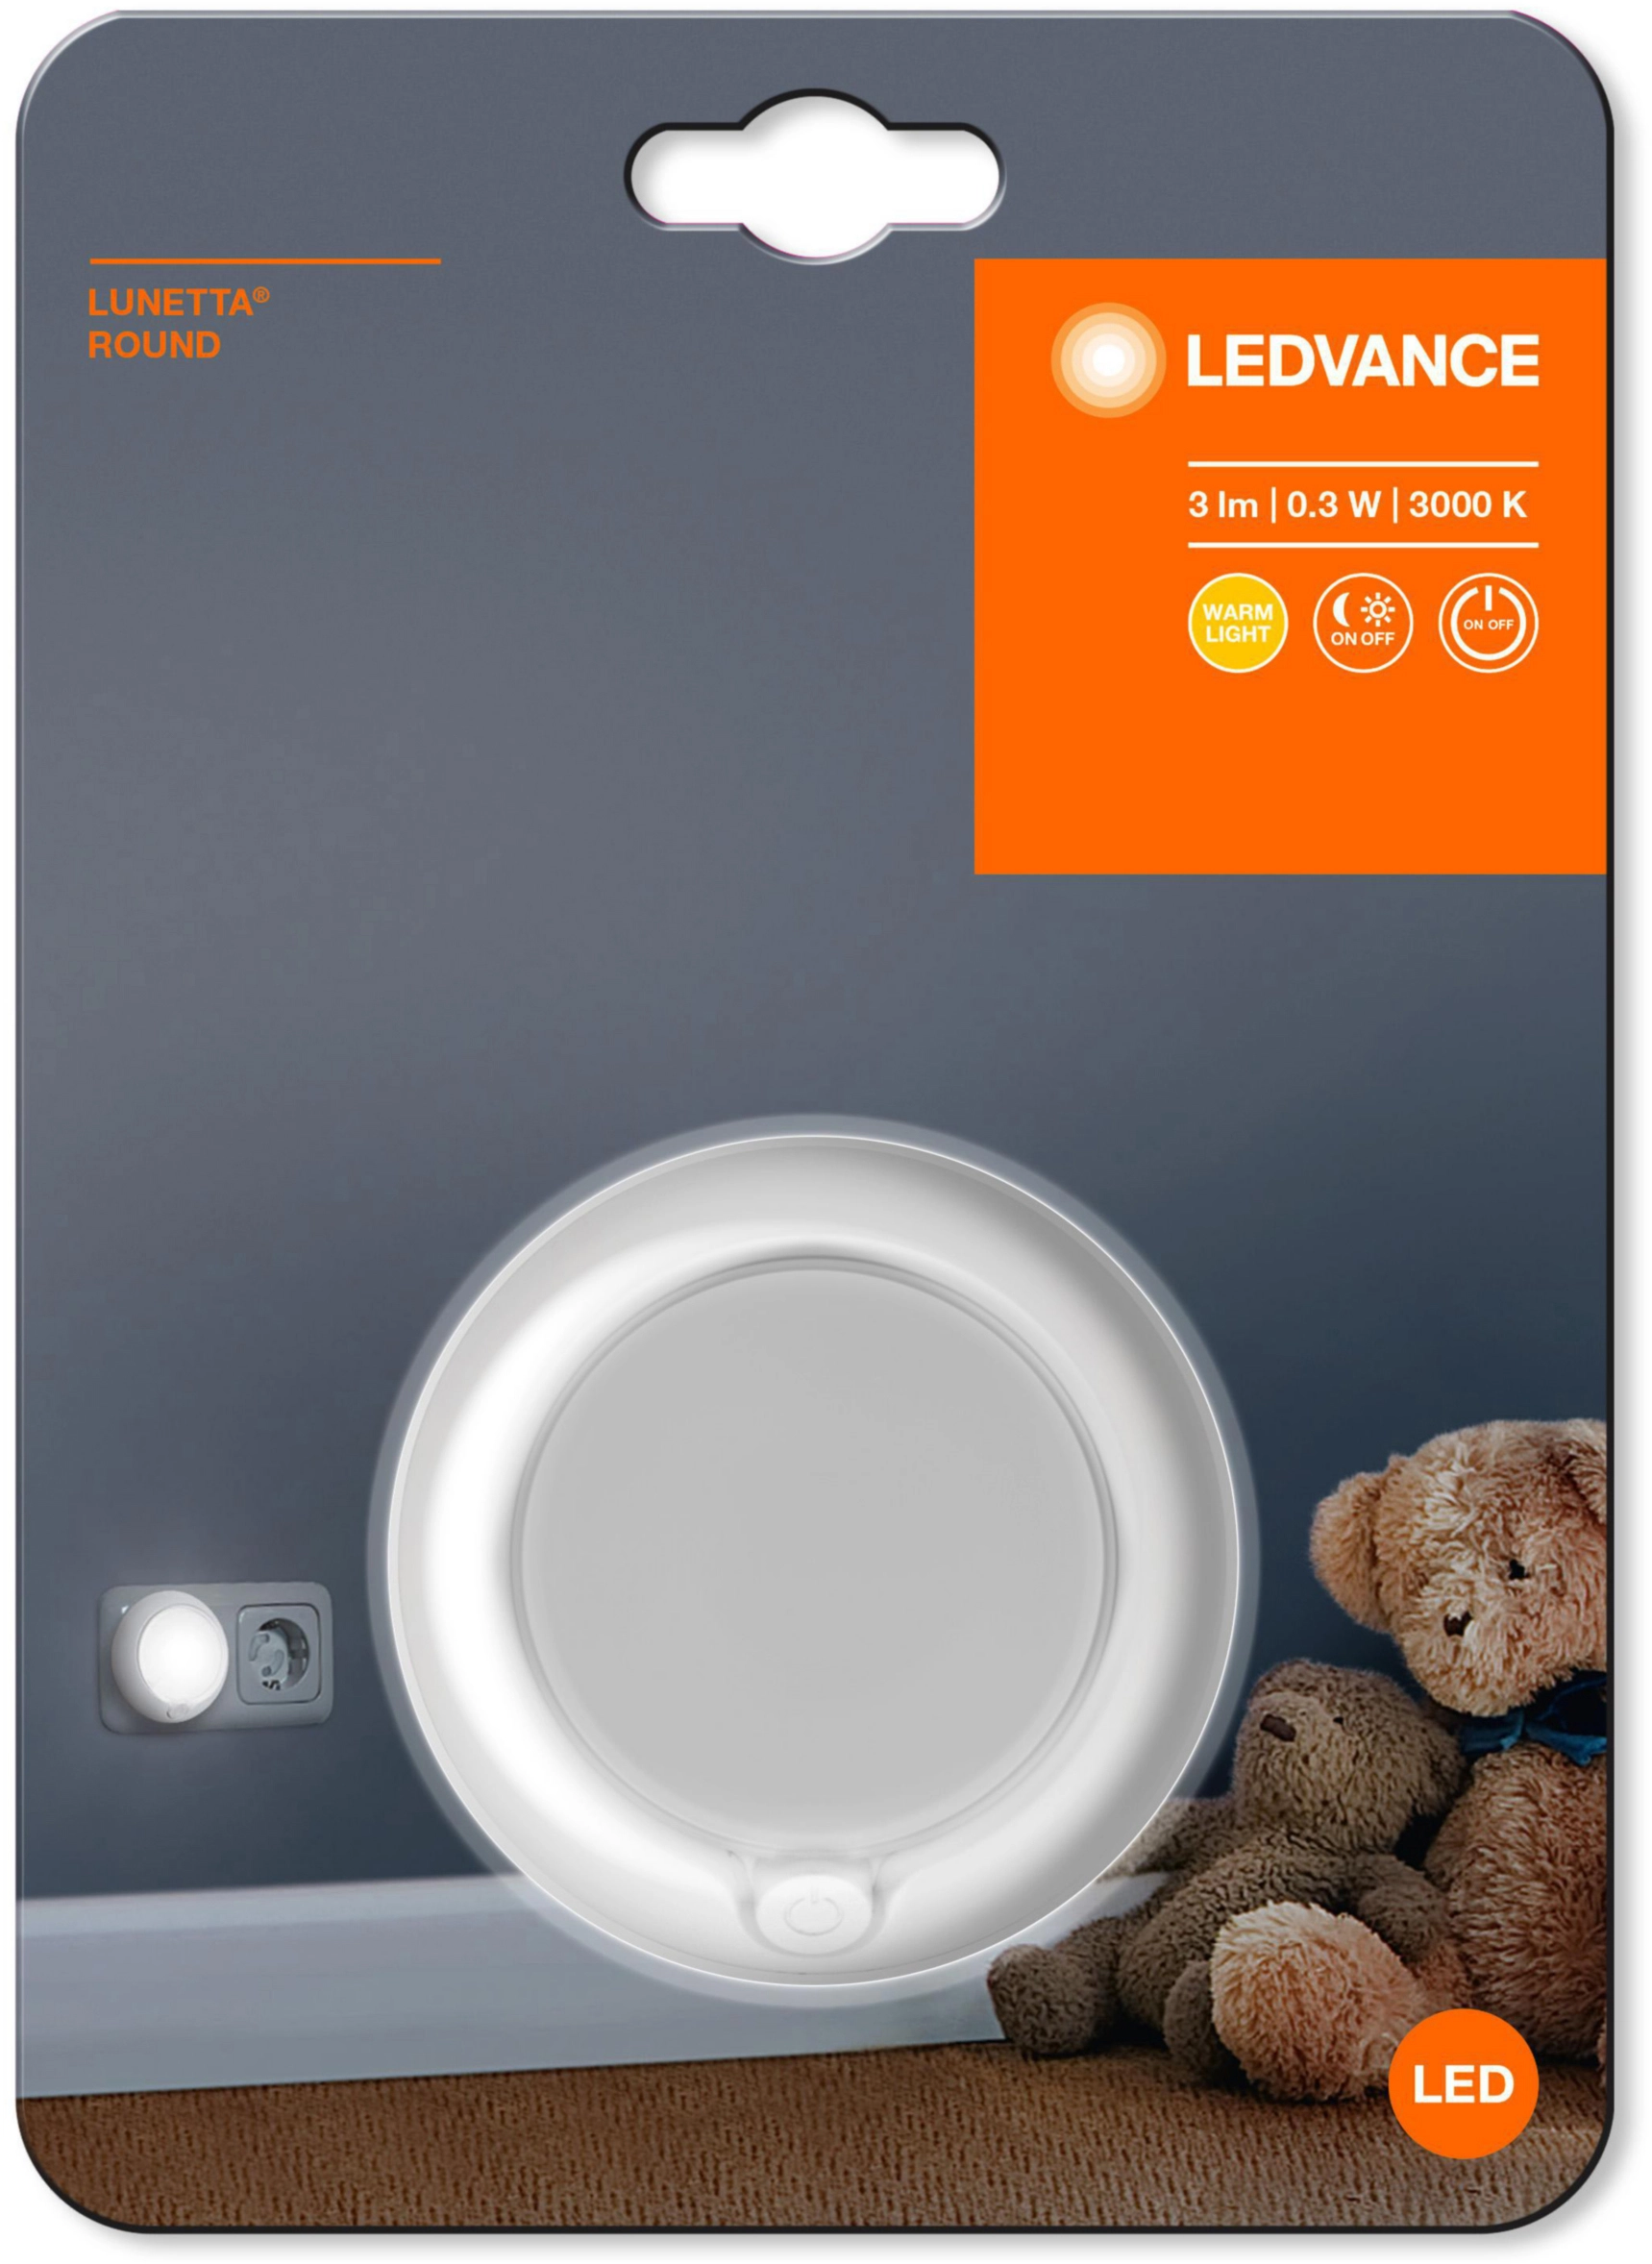 Lampada LED Ledvance Lunetta Round luce notturna bianco 0.3 W 3 lm 3000 K